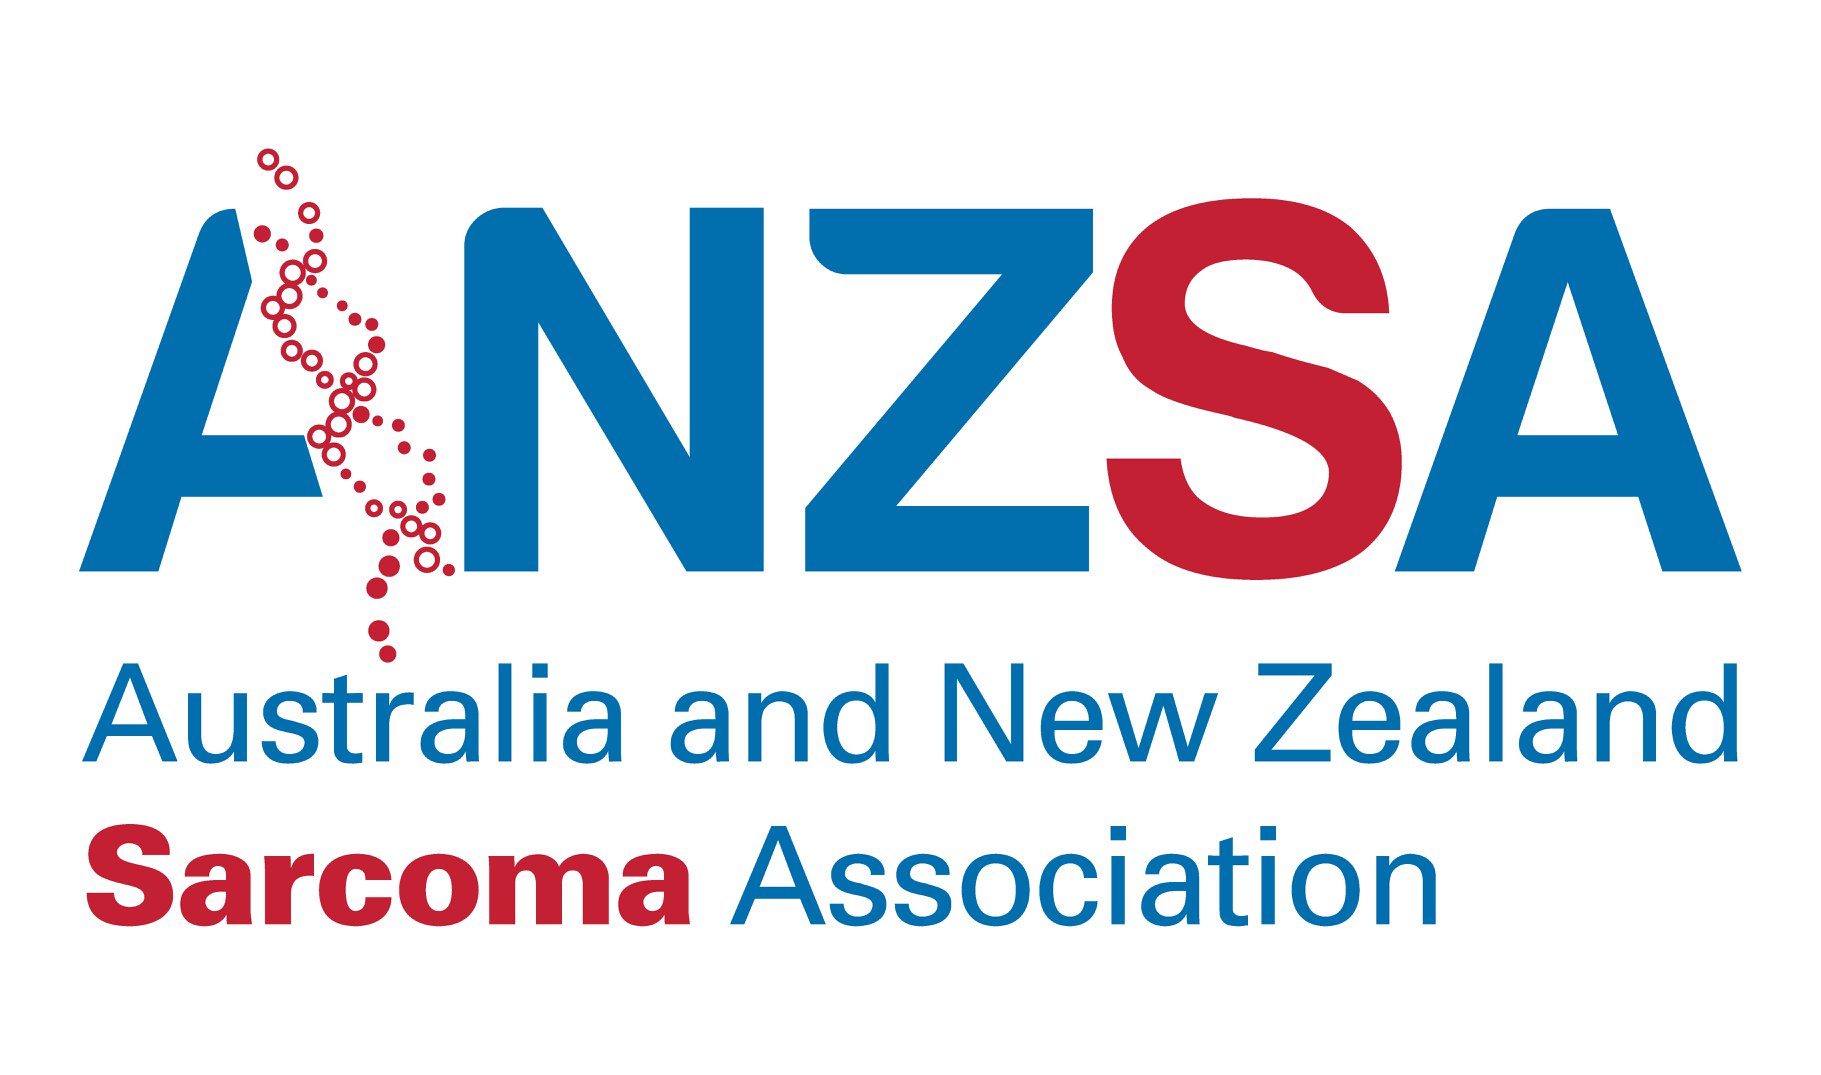 Australia and New Zealand Sarcoma Association